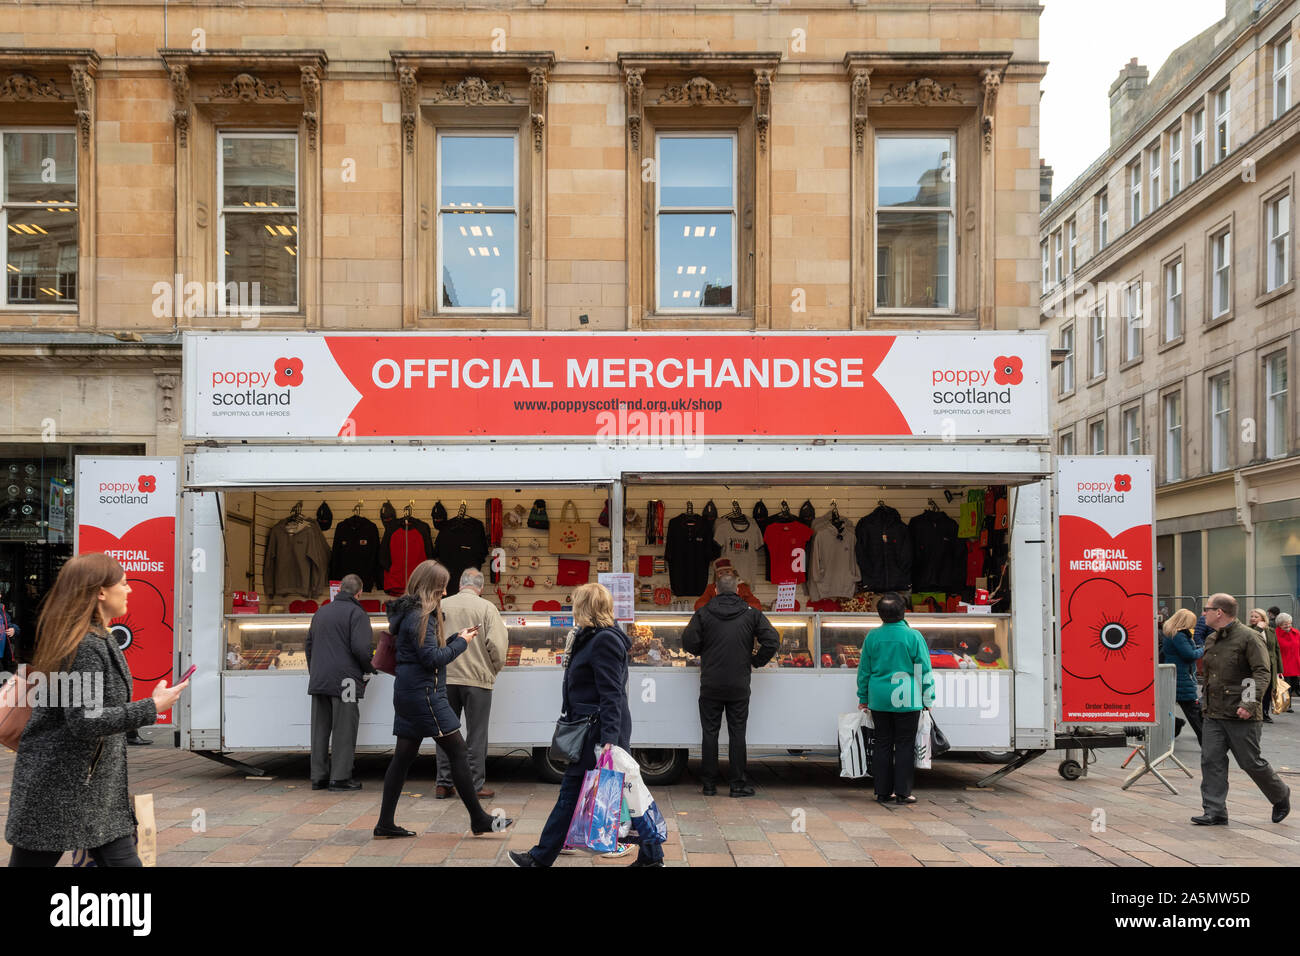 Poppy Scotland Official Merchandise stand on Buchanan Street, Glasgow, Scotland, UK Stock Photo